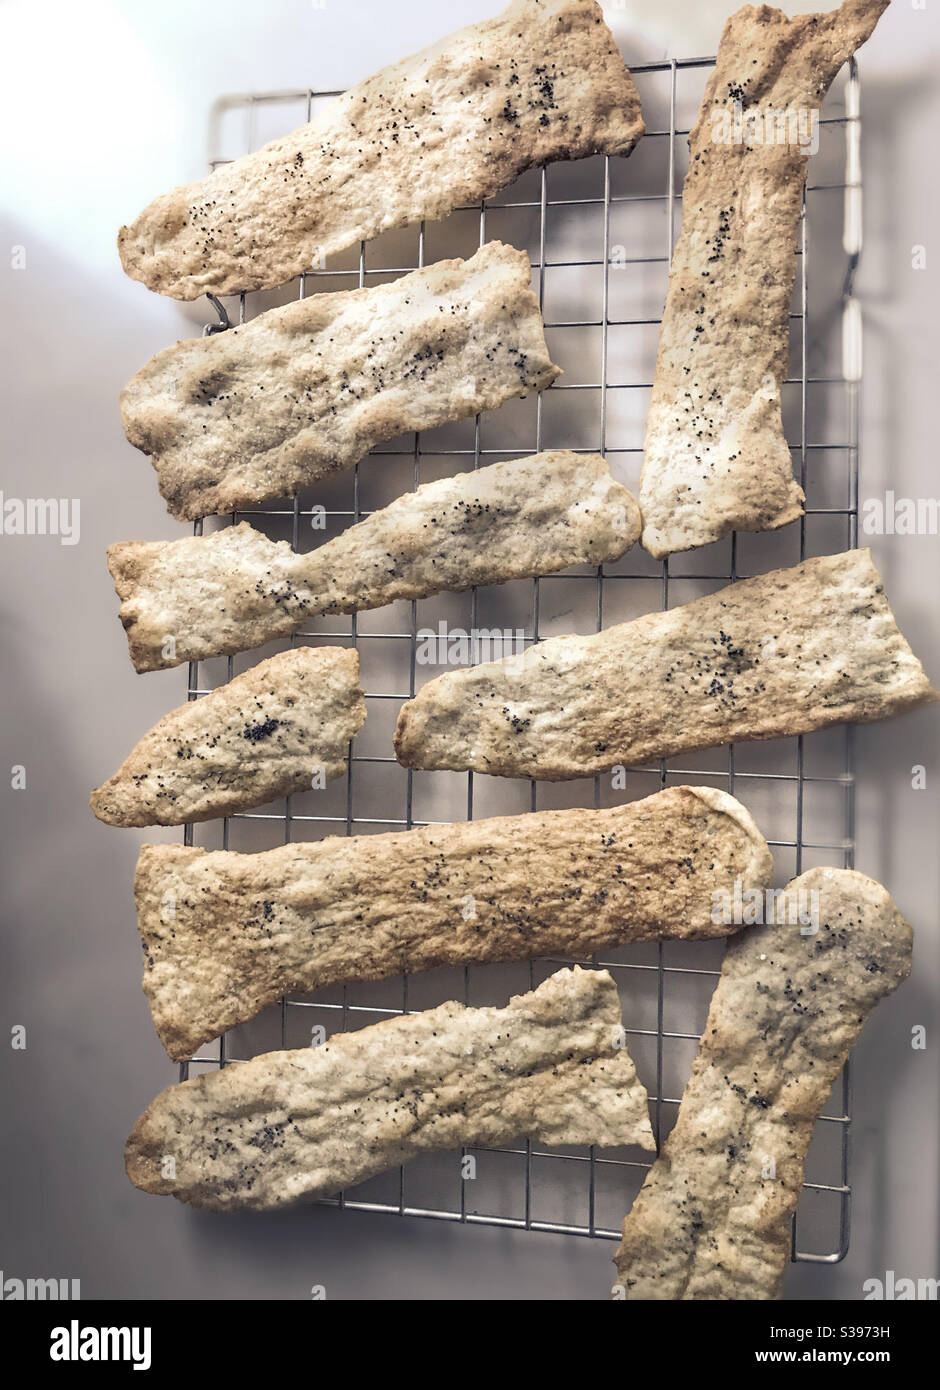 Homemade sourdough crackers Stock Photo